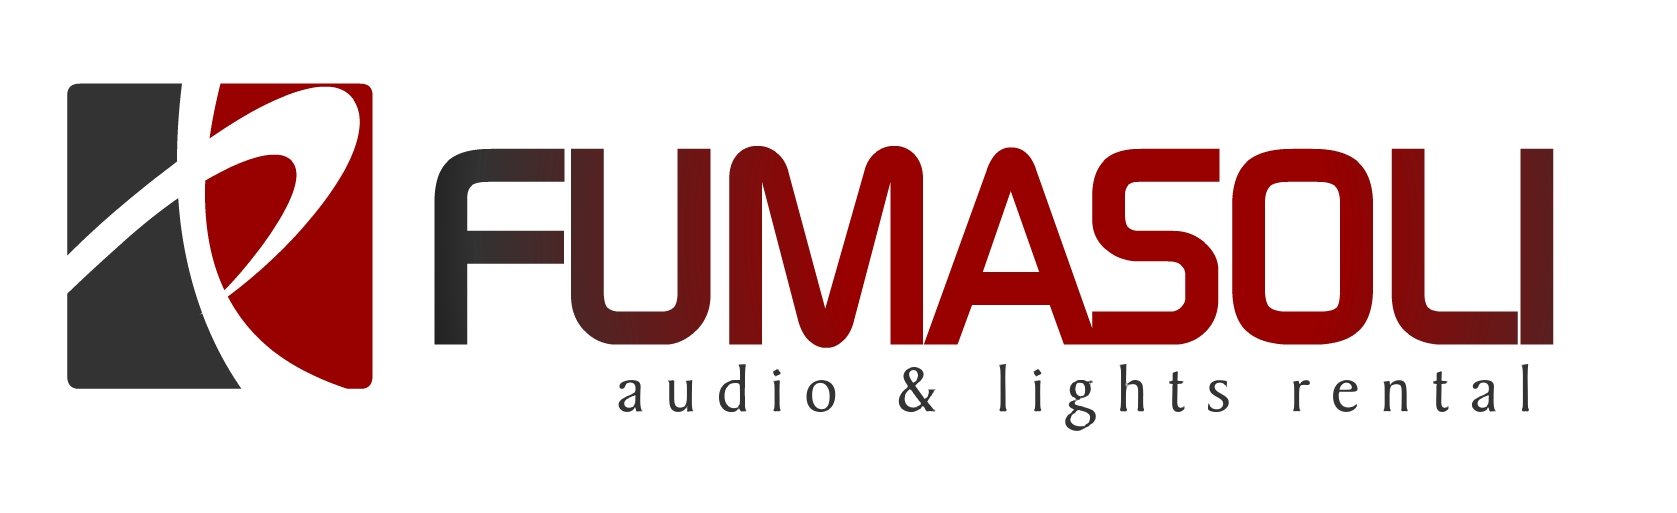 Servizi fumasoli audio & lights rental